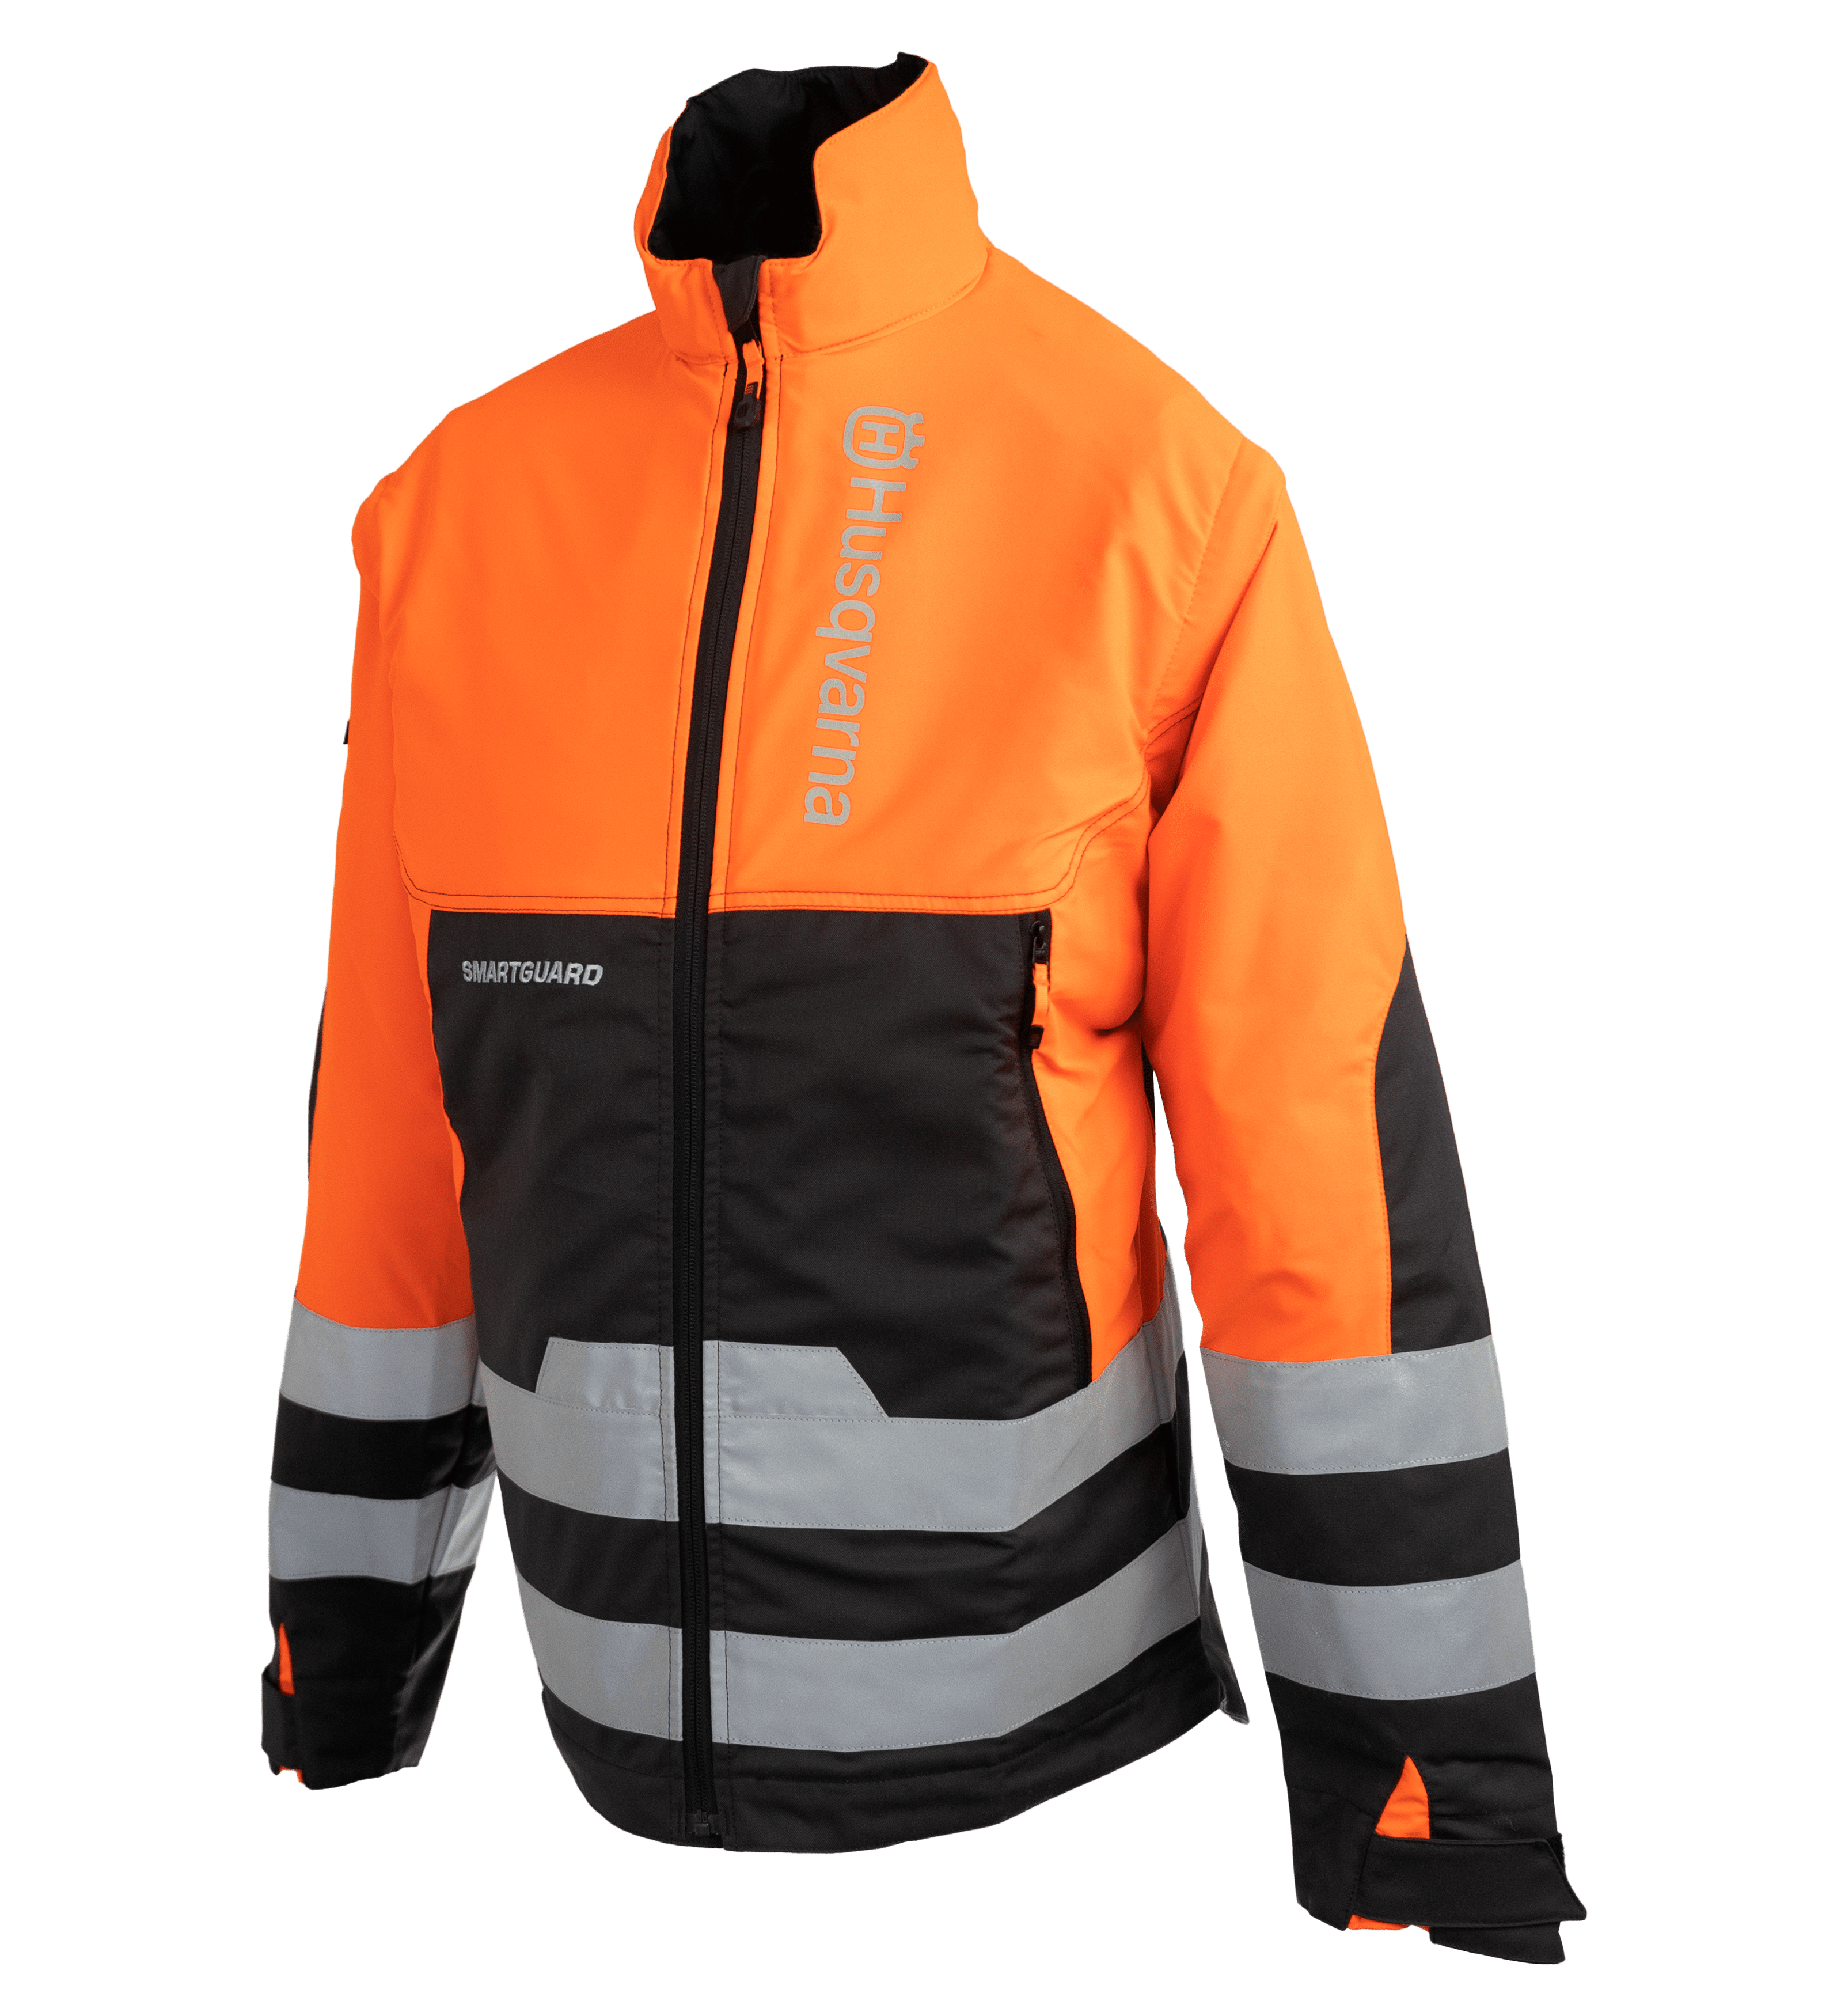 Husqvarna Smartguard Jacket